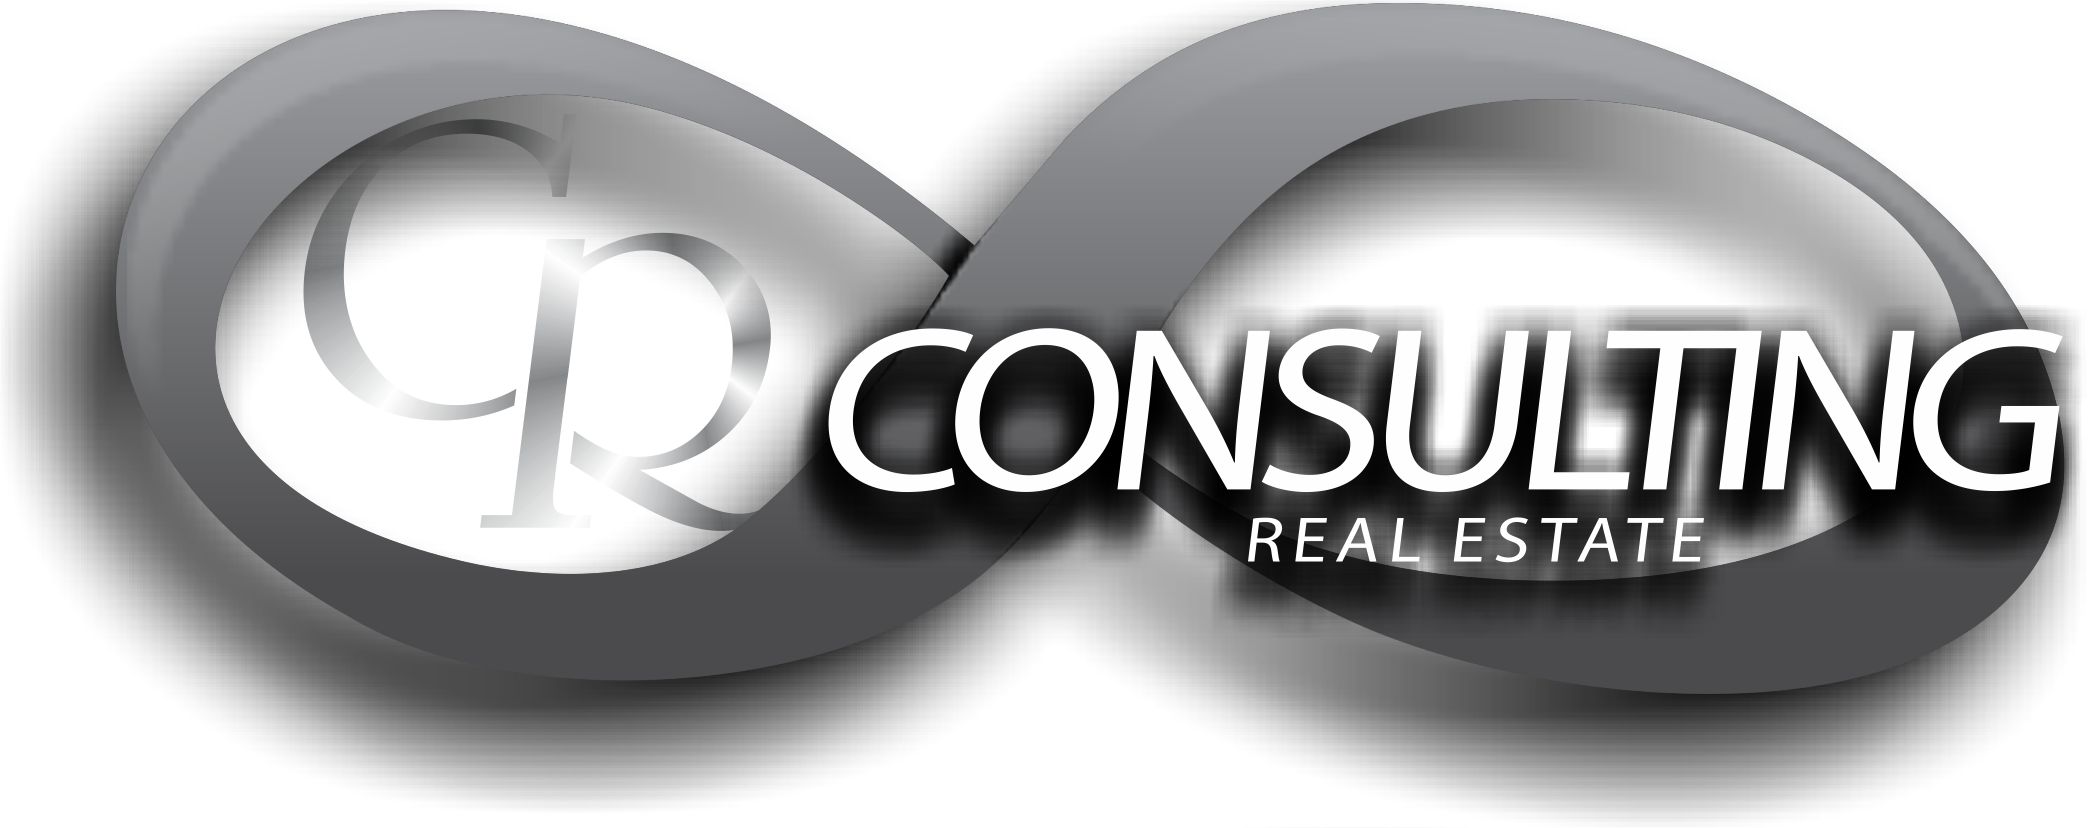 CR Consulting, LLC